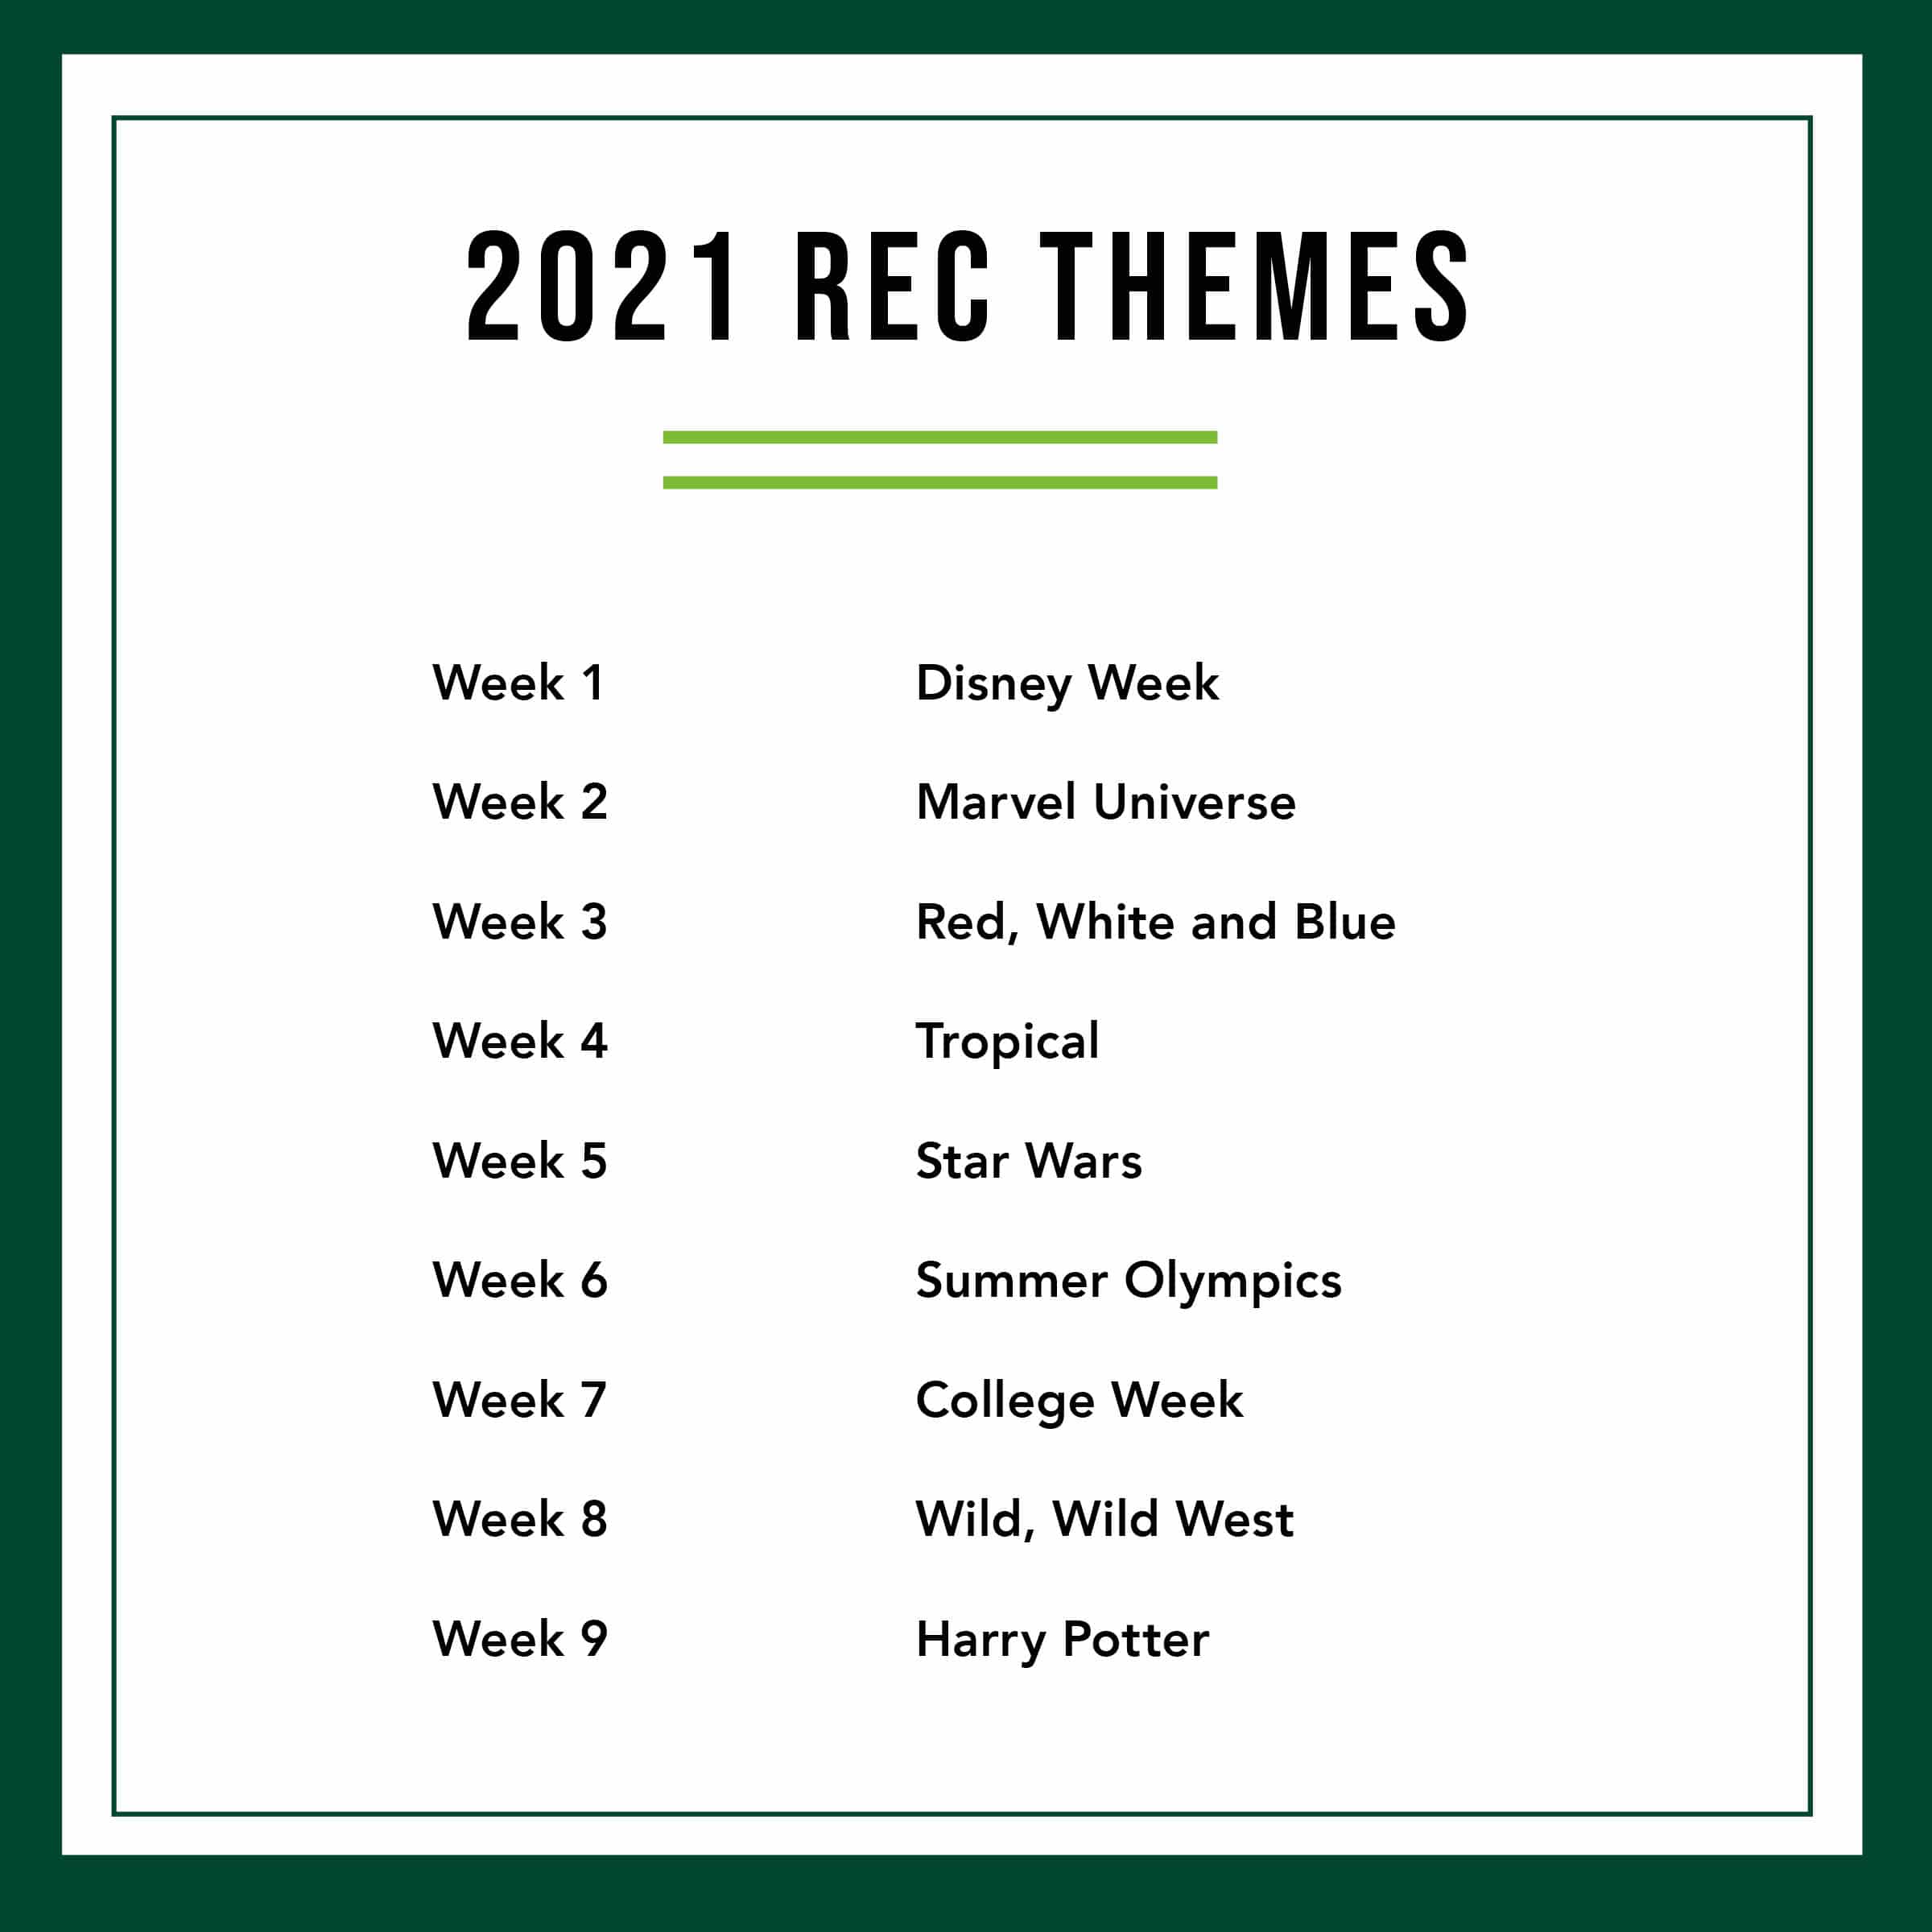 ISTC Rec Themes 2021